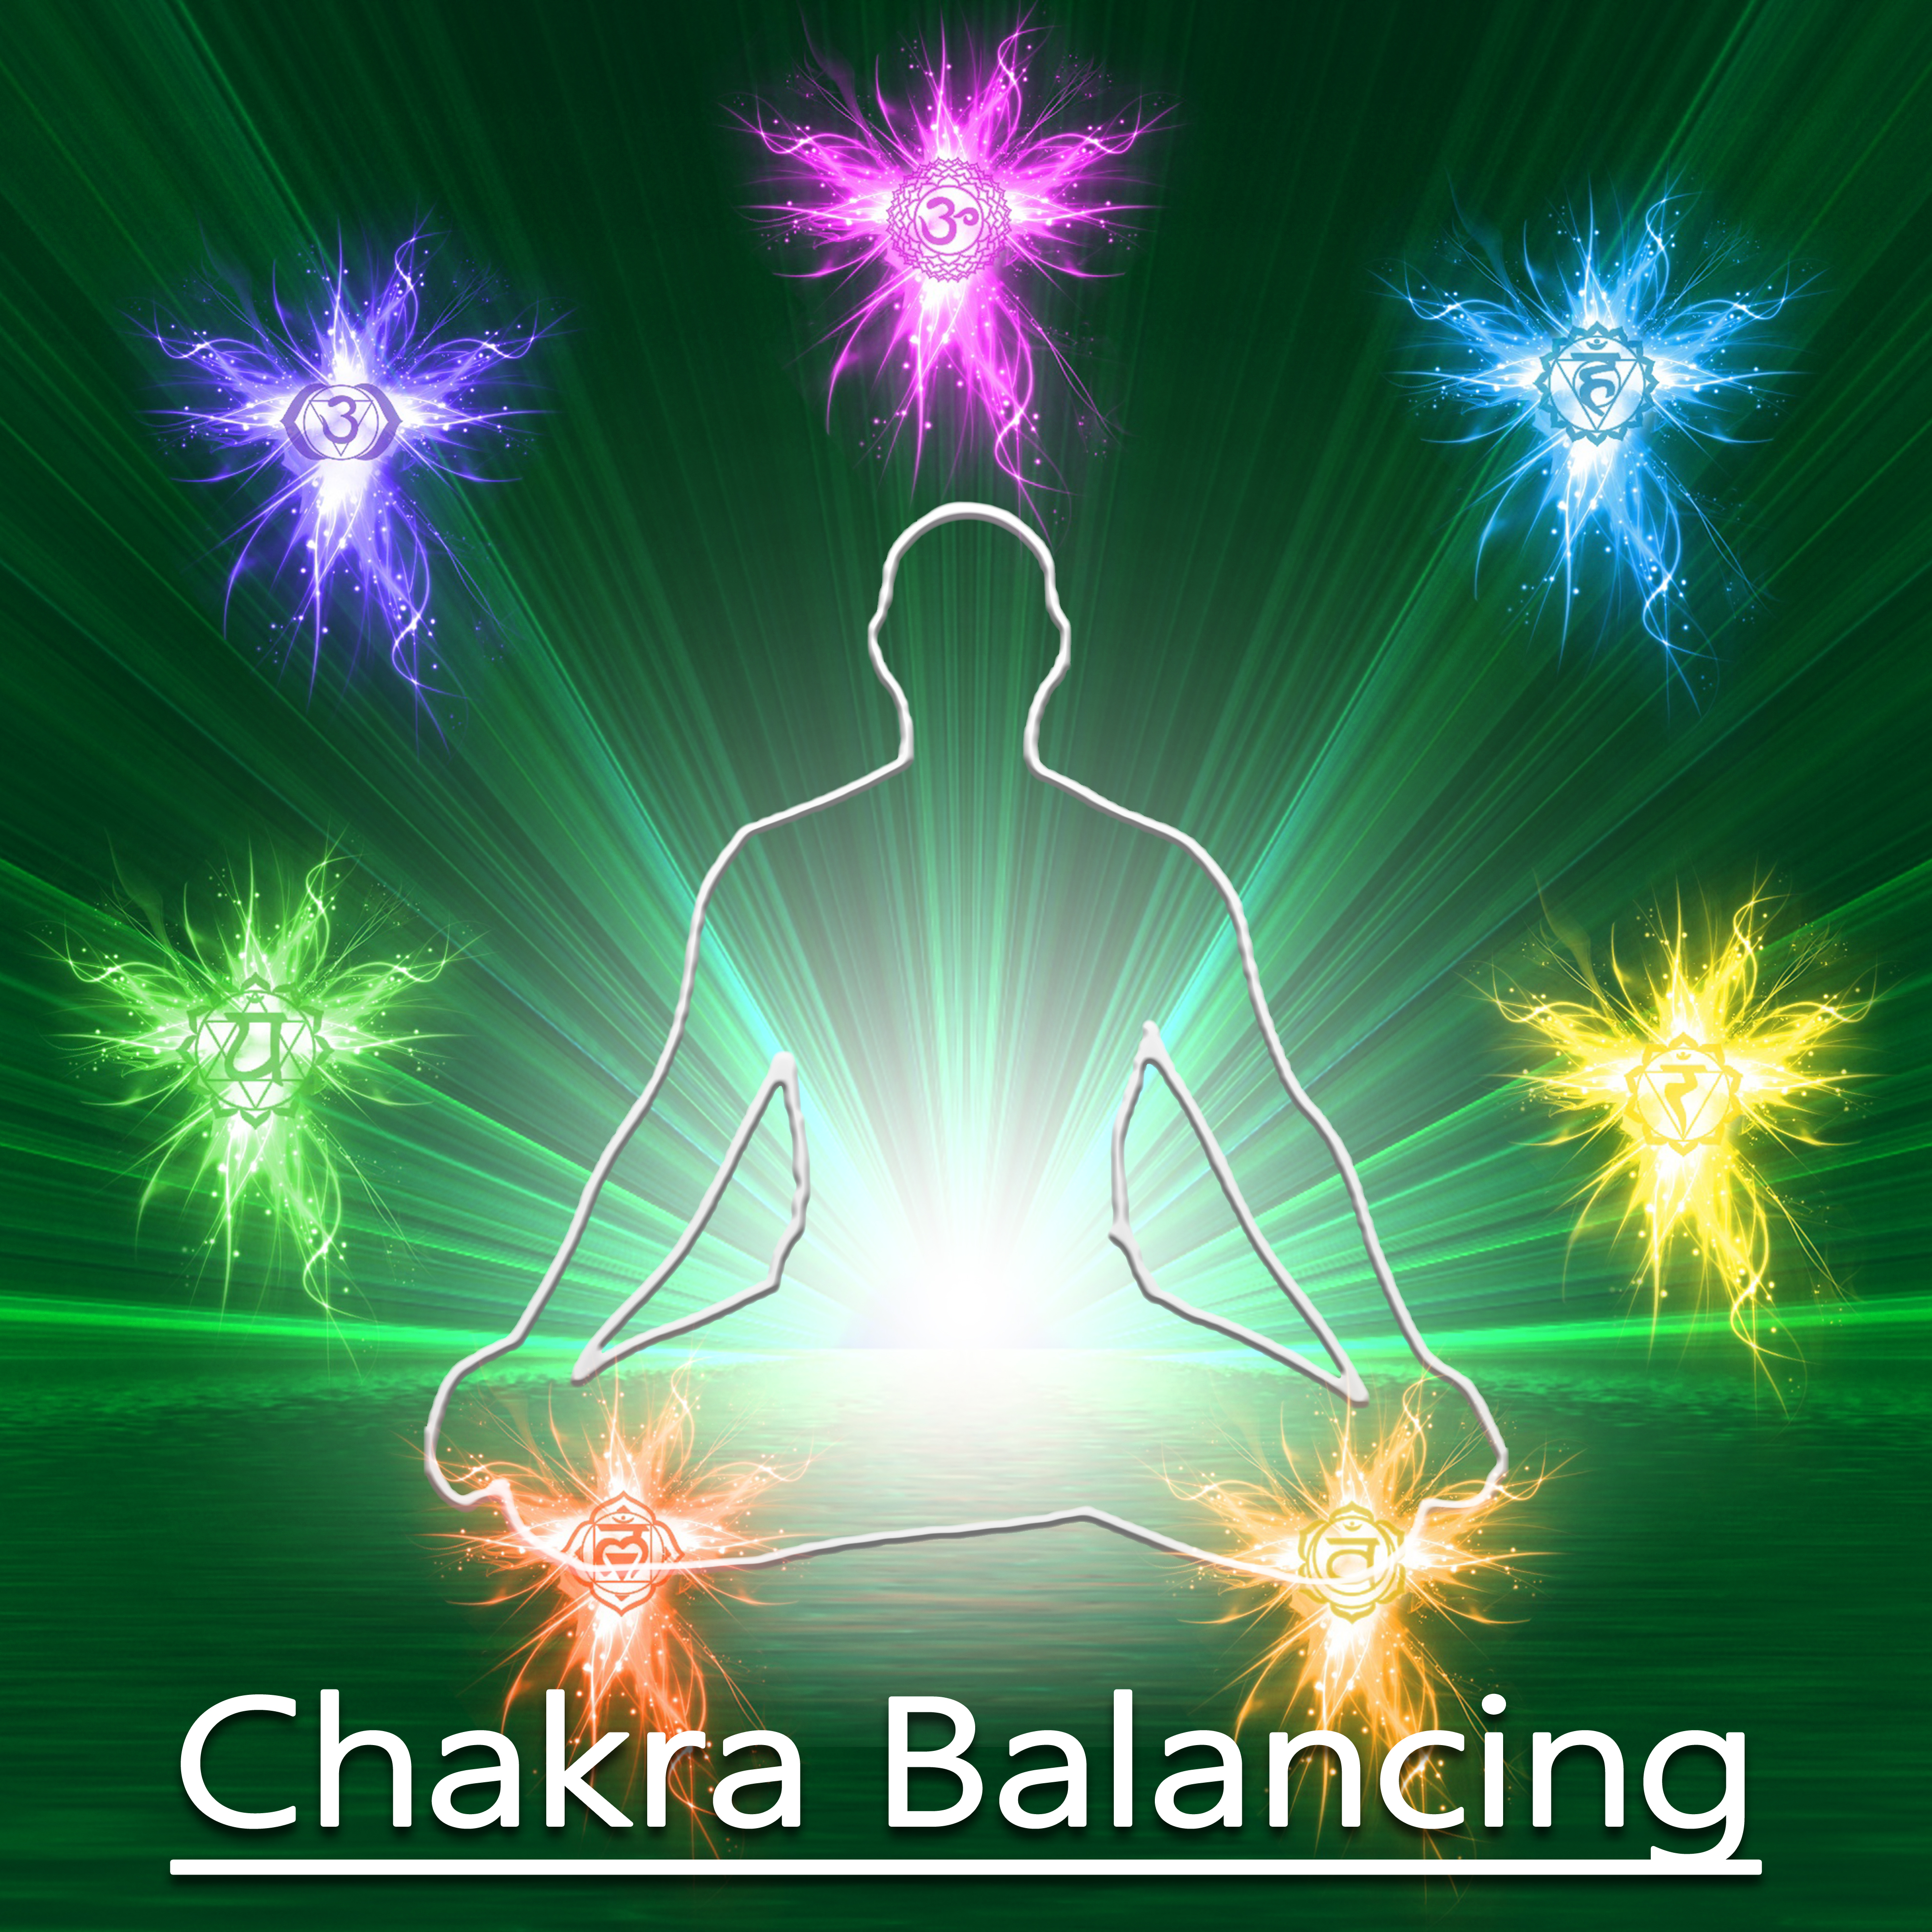 Chakra Balancing – Therapeutic Music, Healing Nature Sounds for Anxiety Disorder, Deep Chakra Meditation